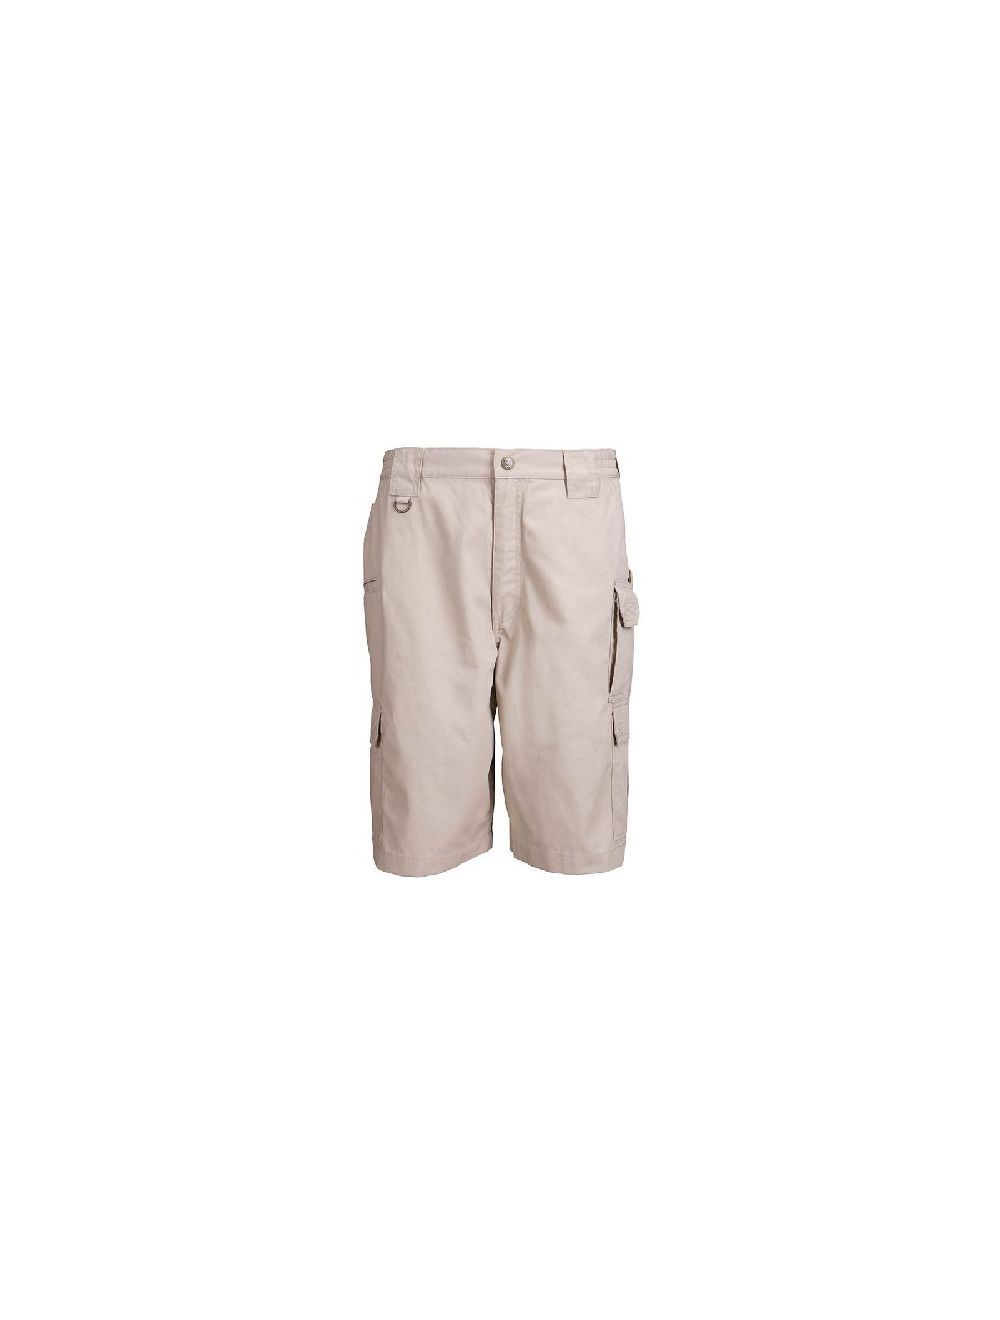 TACLITE Pro 11 Shorts